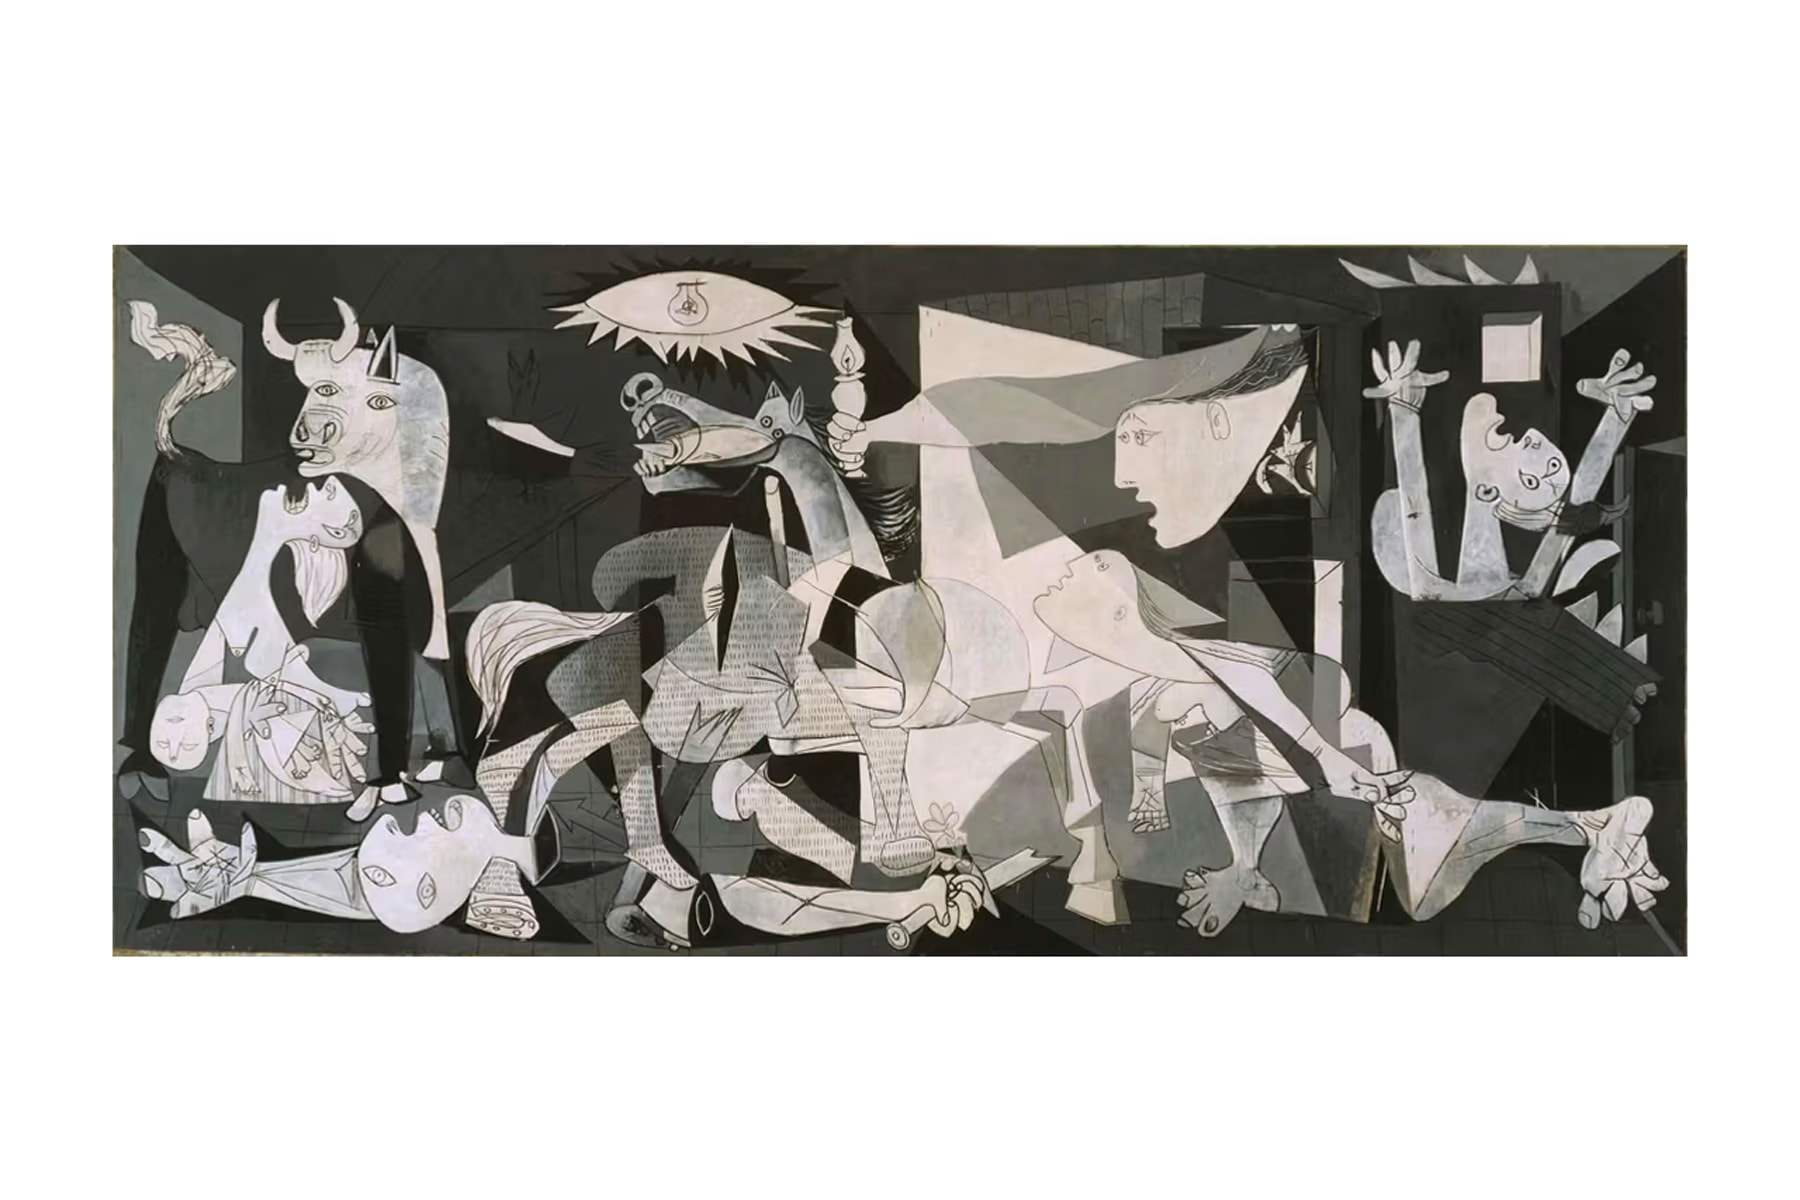 Pablo Picasso 知名畫作《Guernica》正式開放拍攝